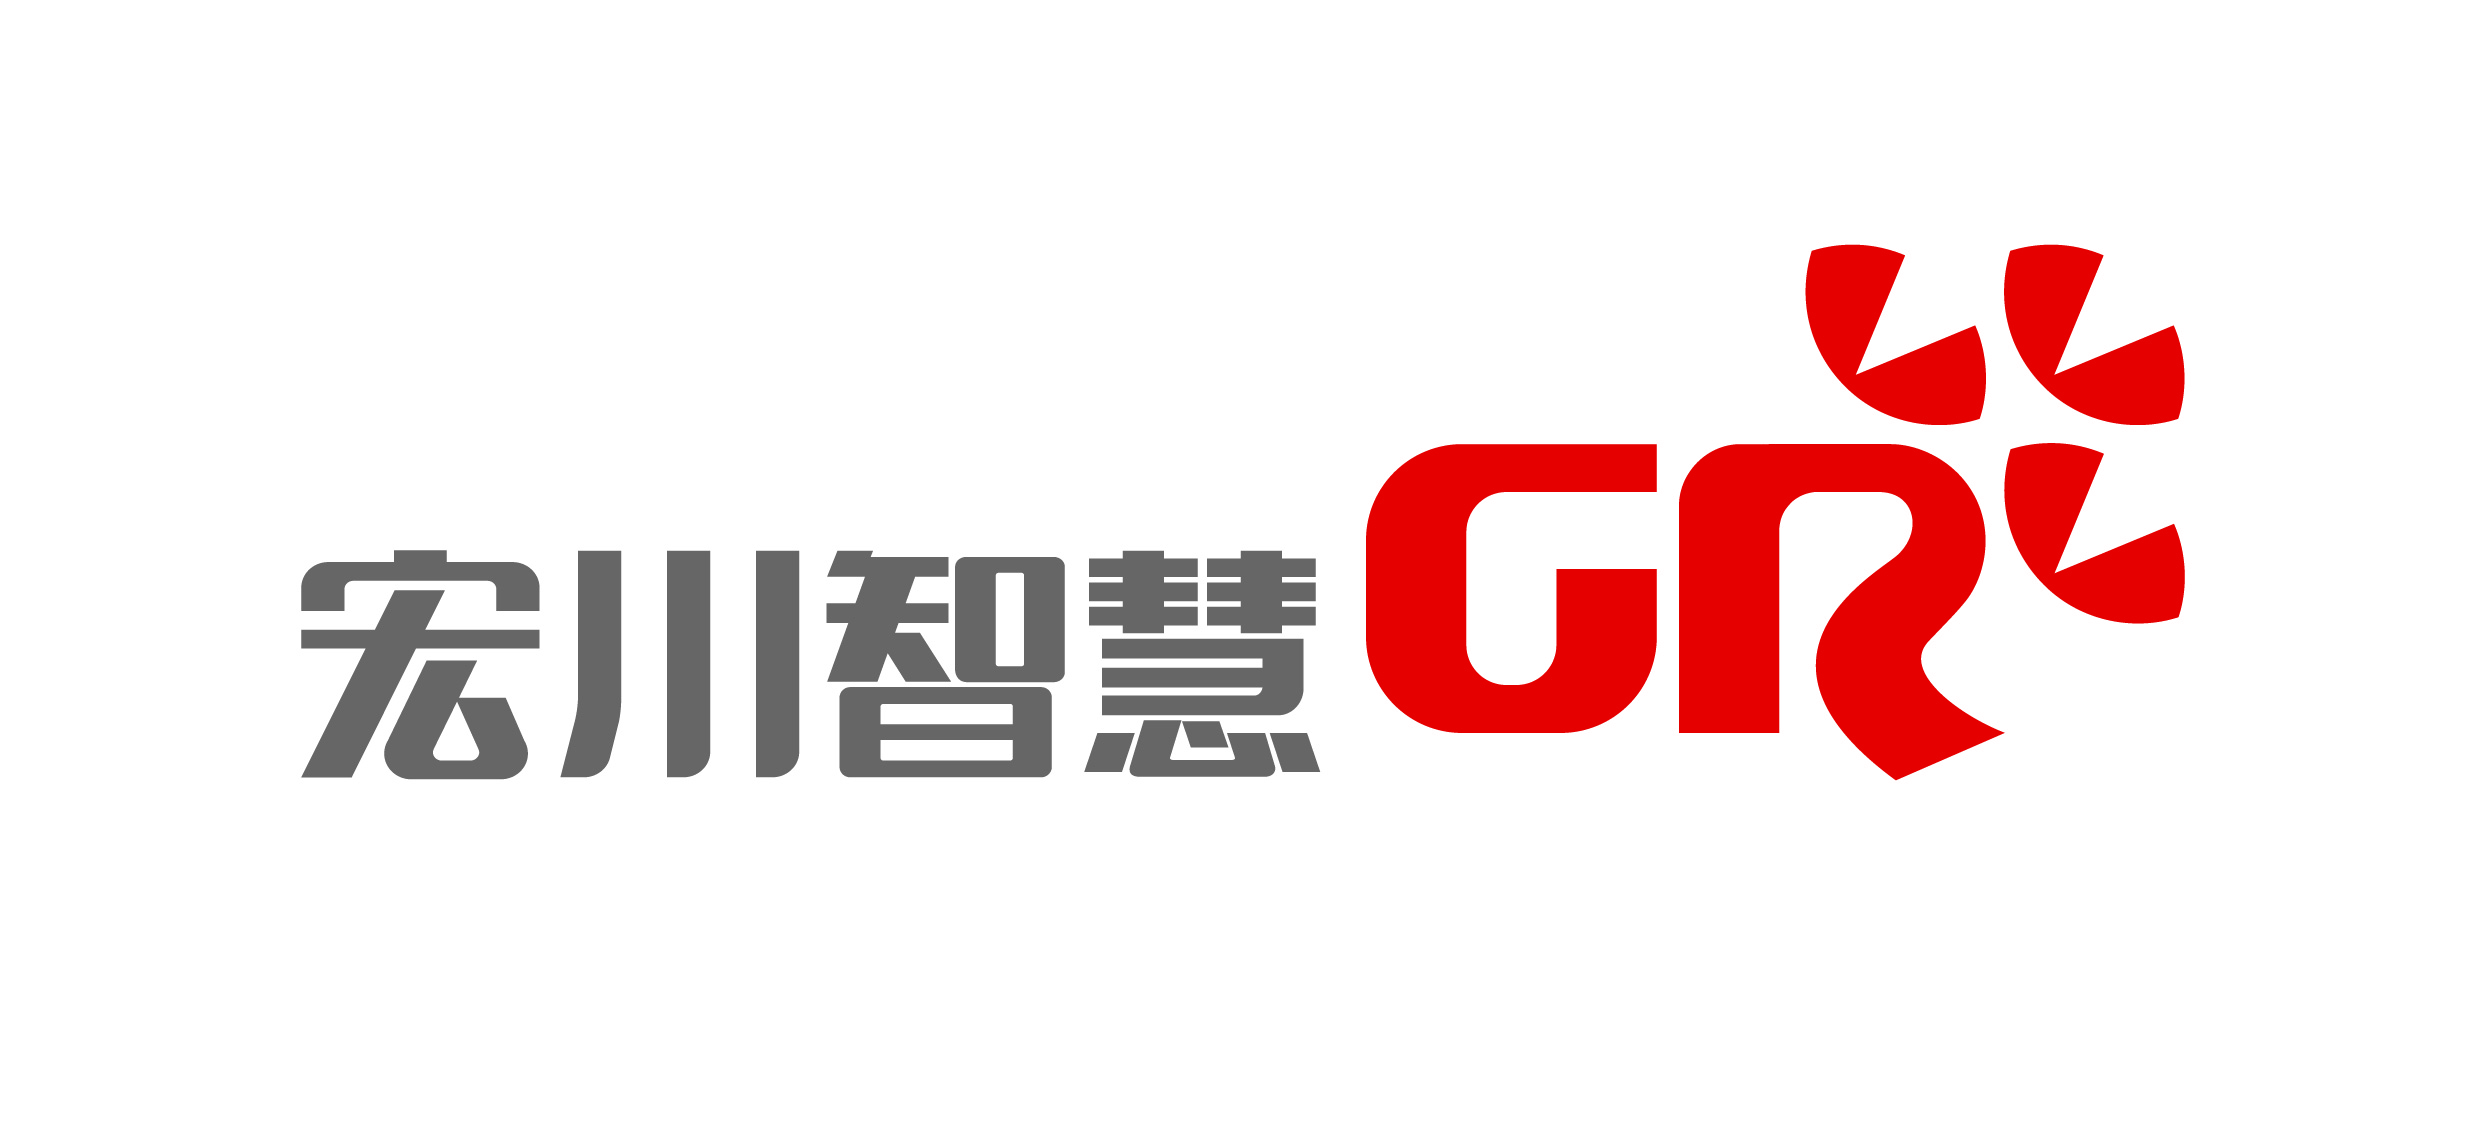 2-tg体育
智慧logo（单）-01.jpg